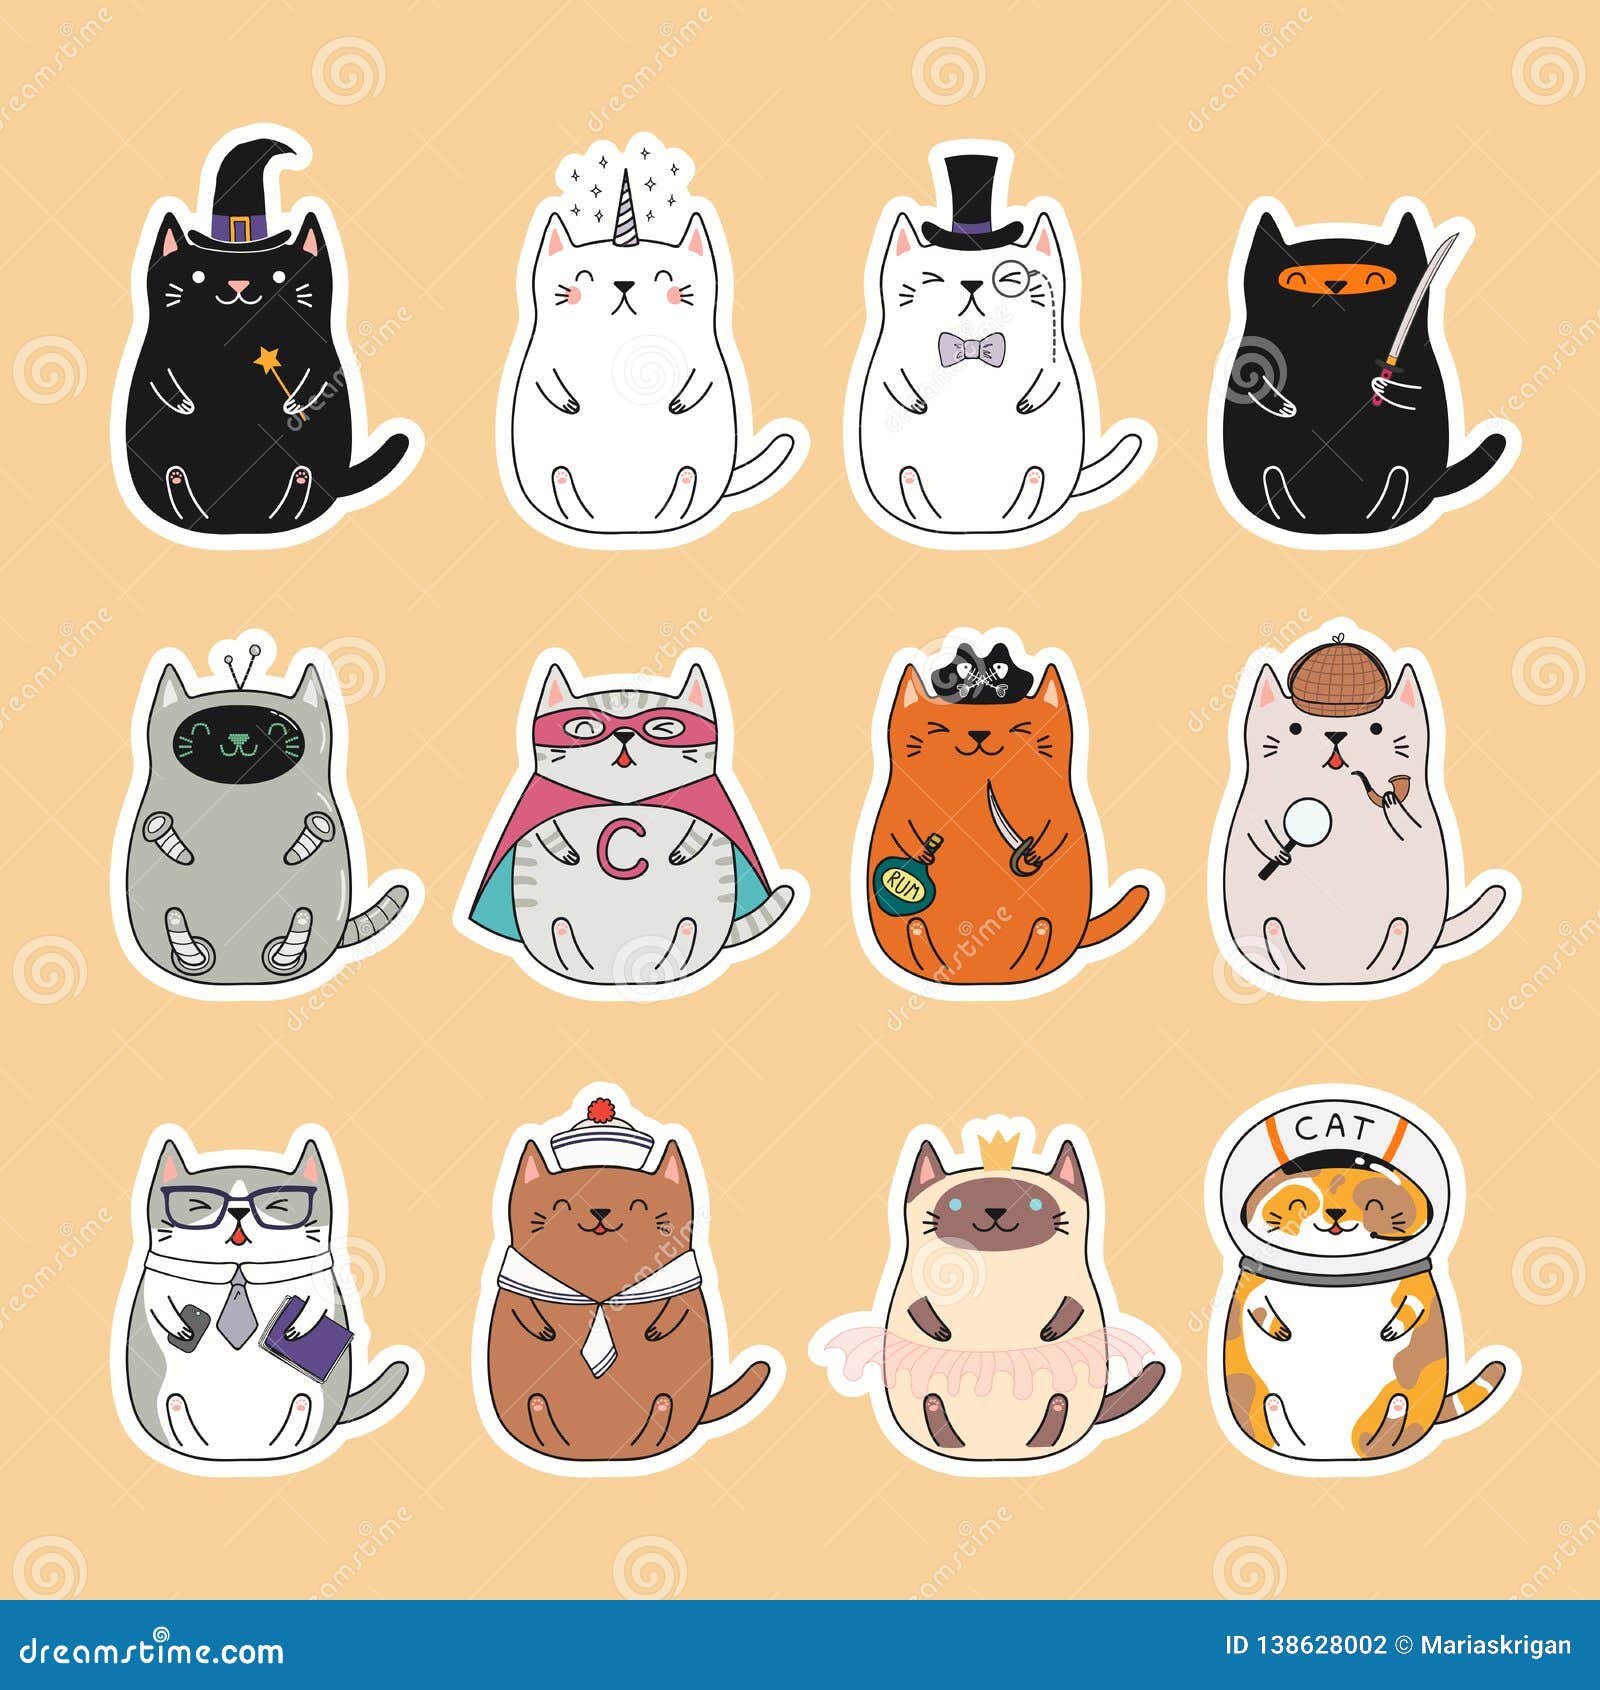 Kawaii Cats Stickers Set Stock Vector Illustration Of Kawaii 138628002